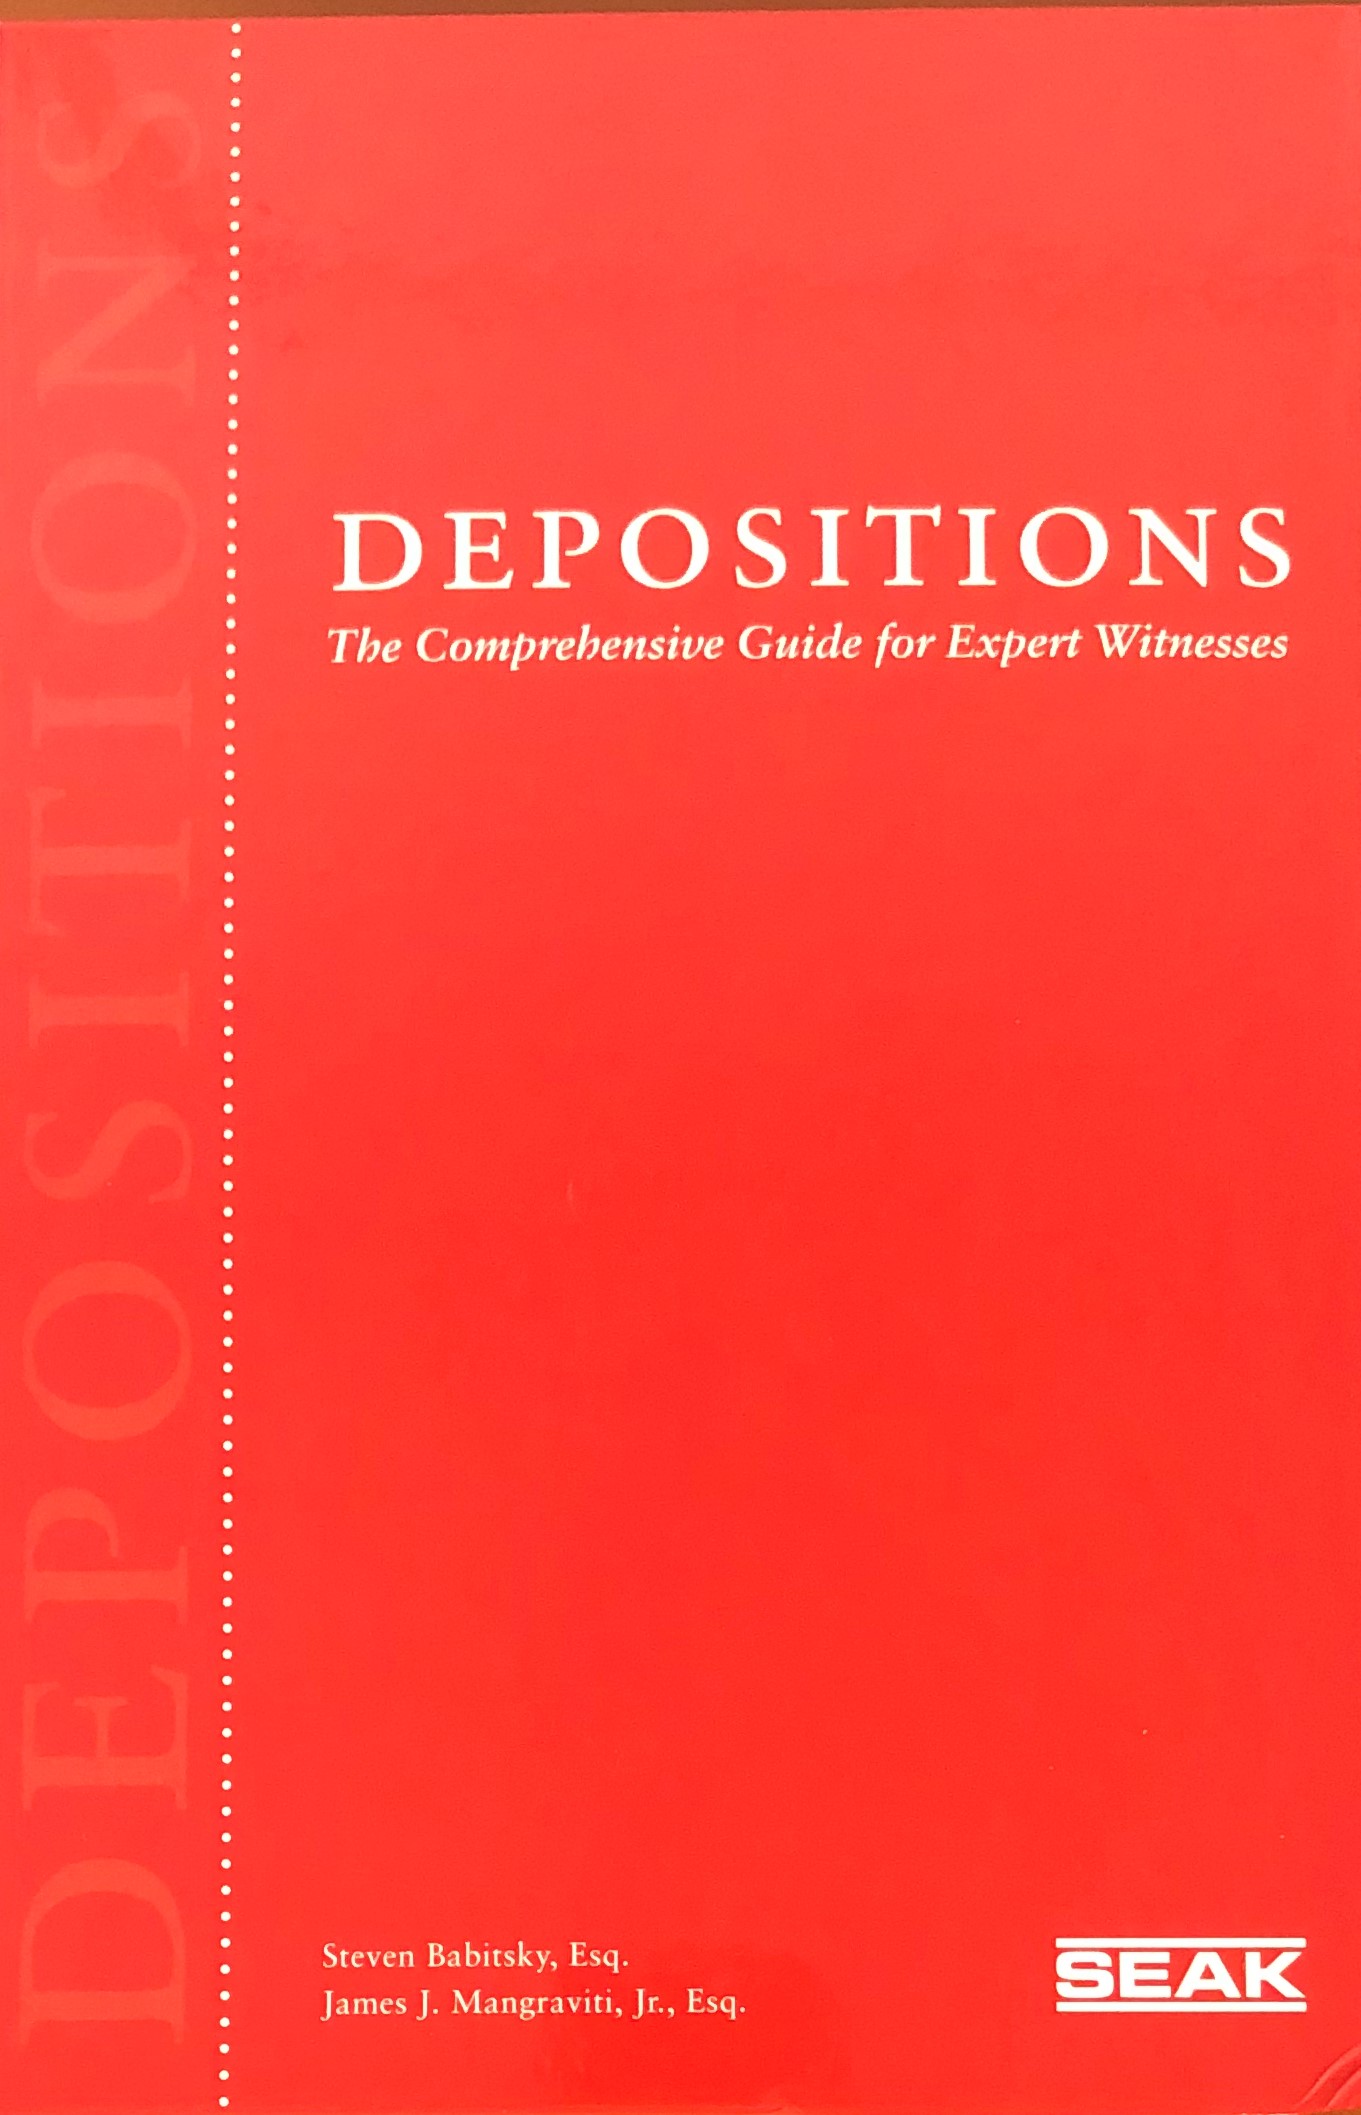 Description Depositions: The Comprehensive Guide for Expert Witnesses